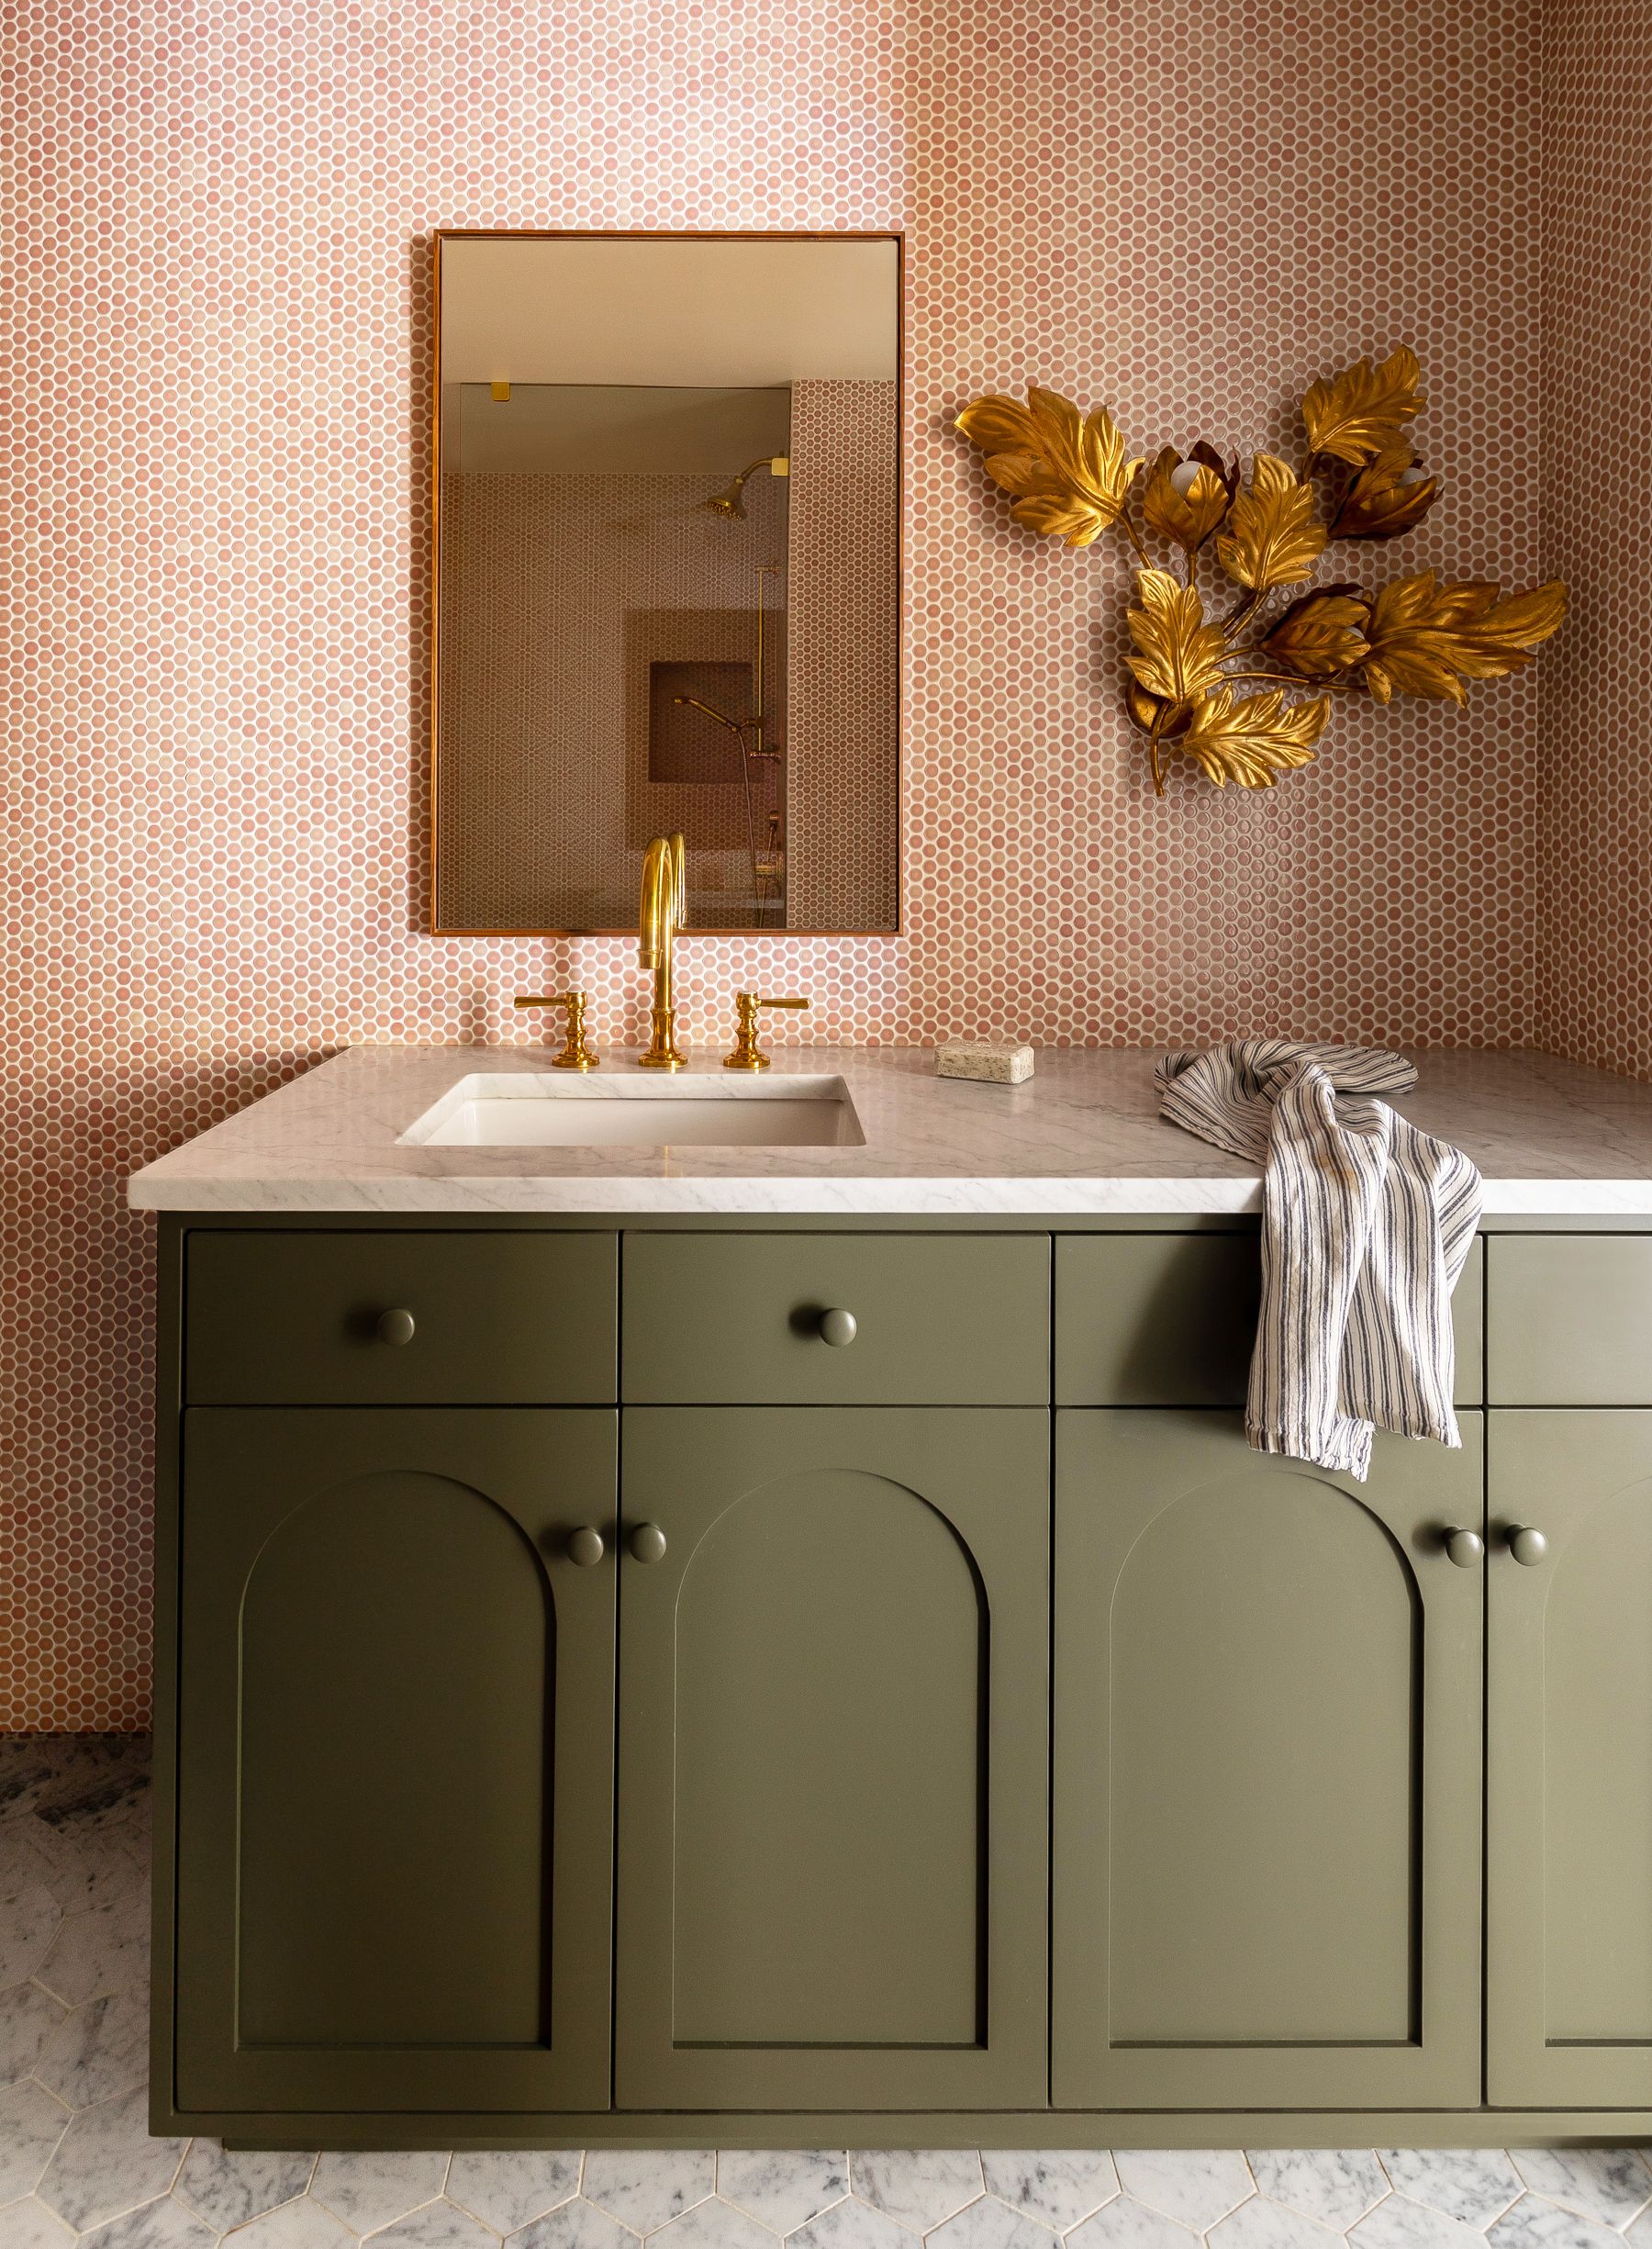 48 Bathroom Tile Ideas Bath Backsplash And Floor Designs - Bathroom Tile Ideas With White Vanity